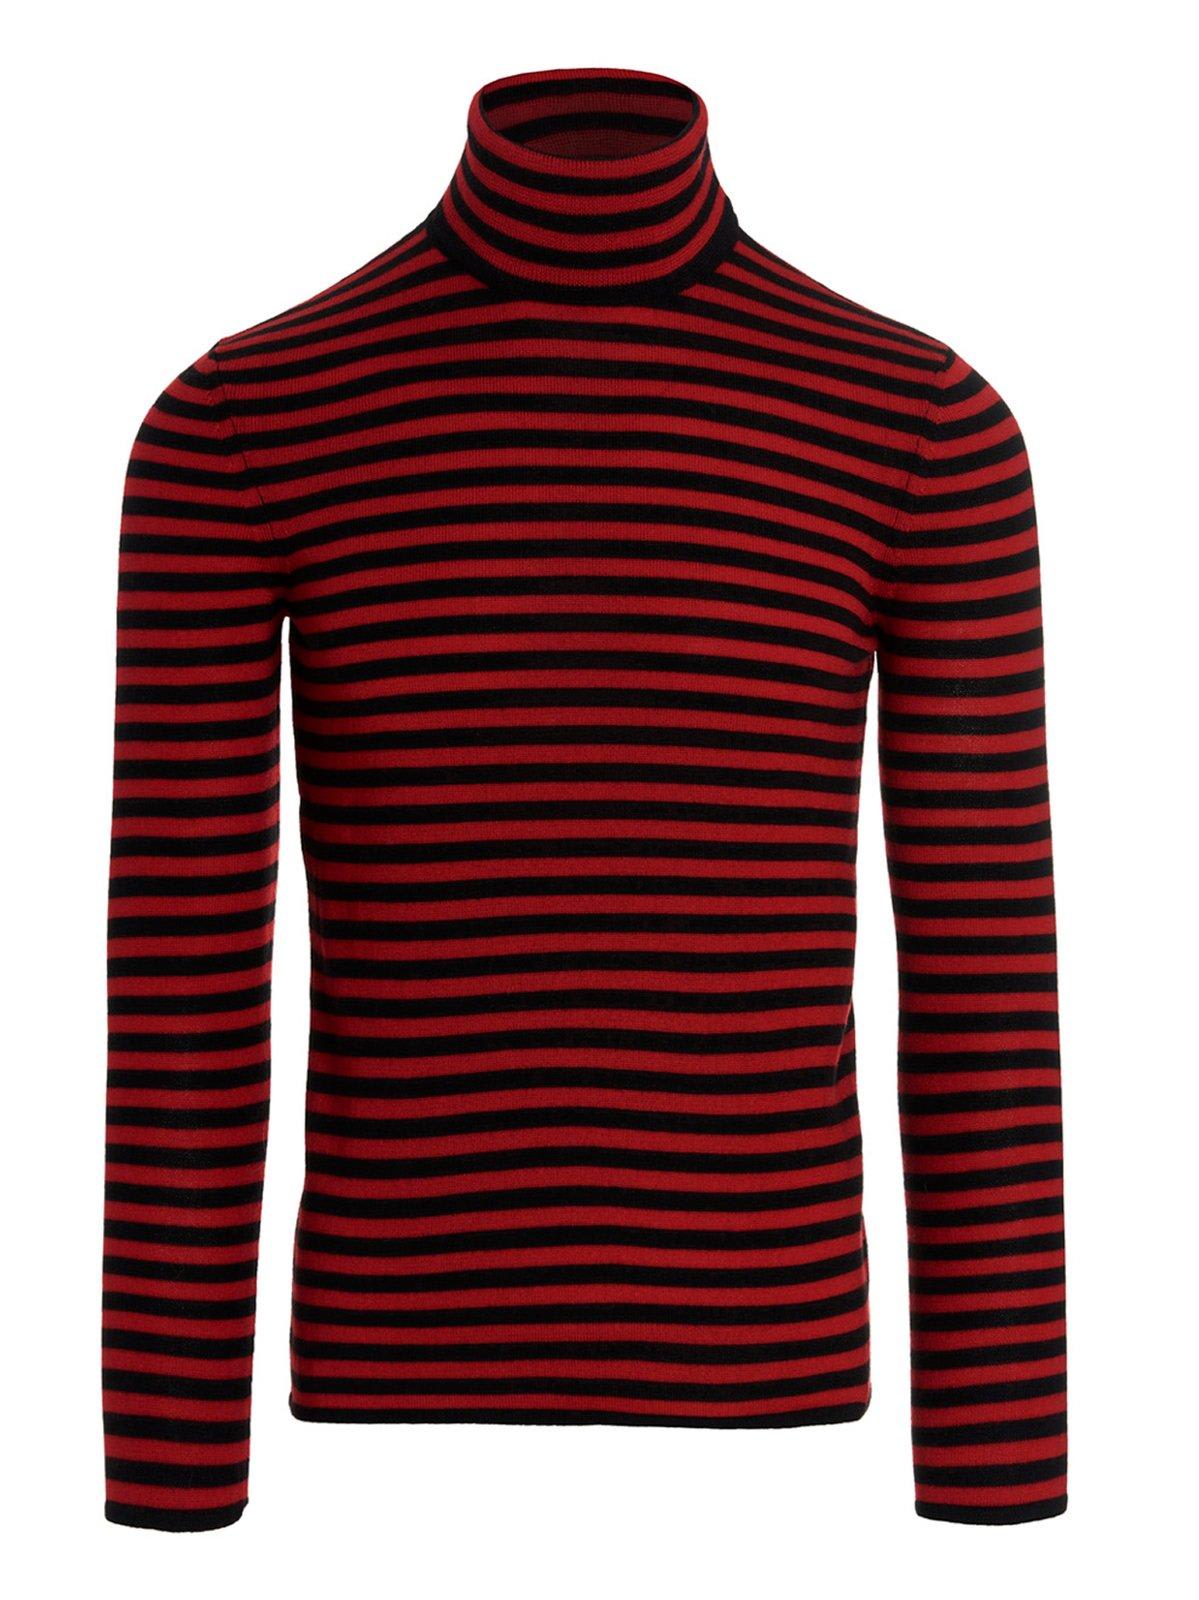 Saint Laurent Striped Turtleneck Sweater